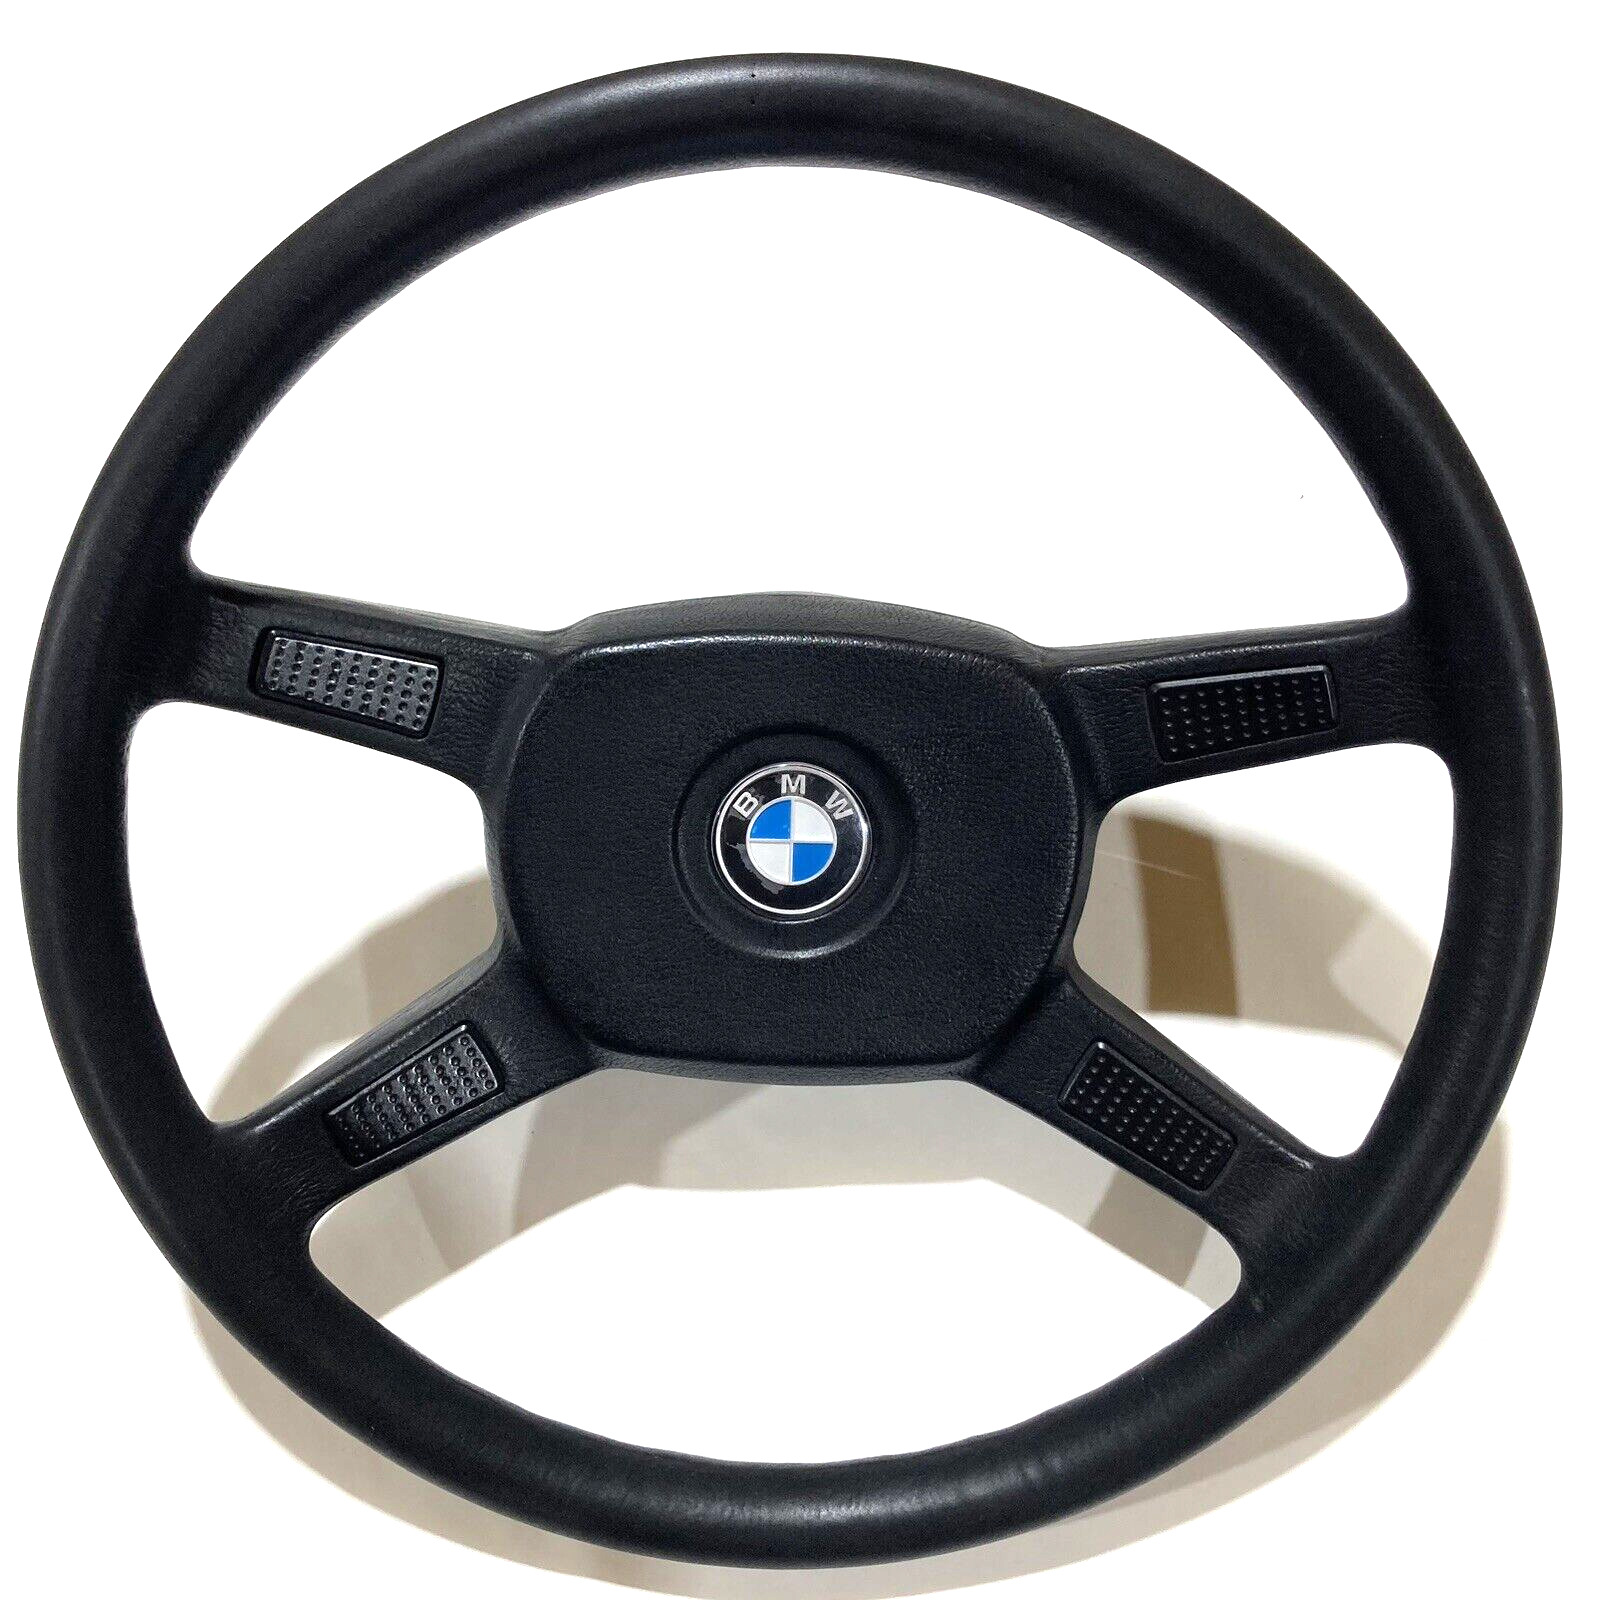 1982-1988 BMW steering wheel (528, 525, 518) E28 (original) 4-spoke